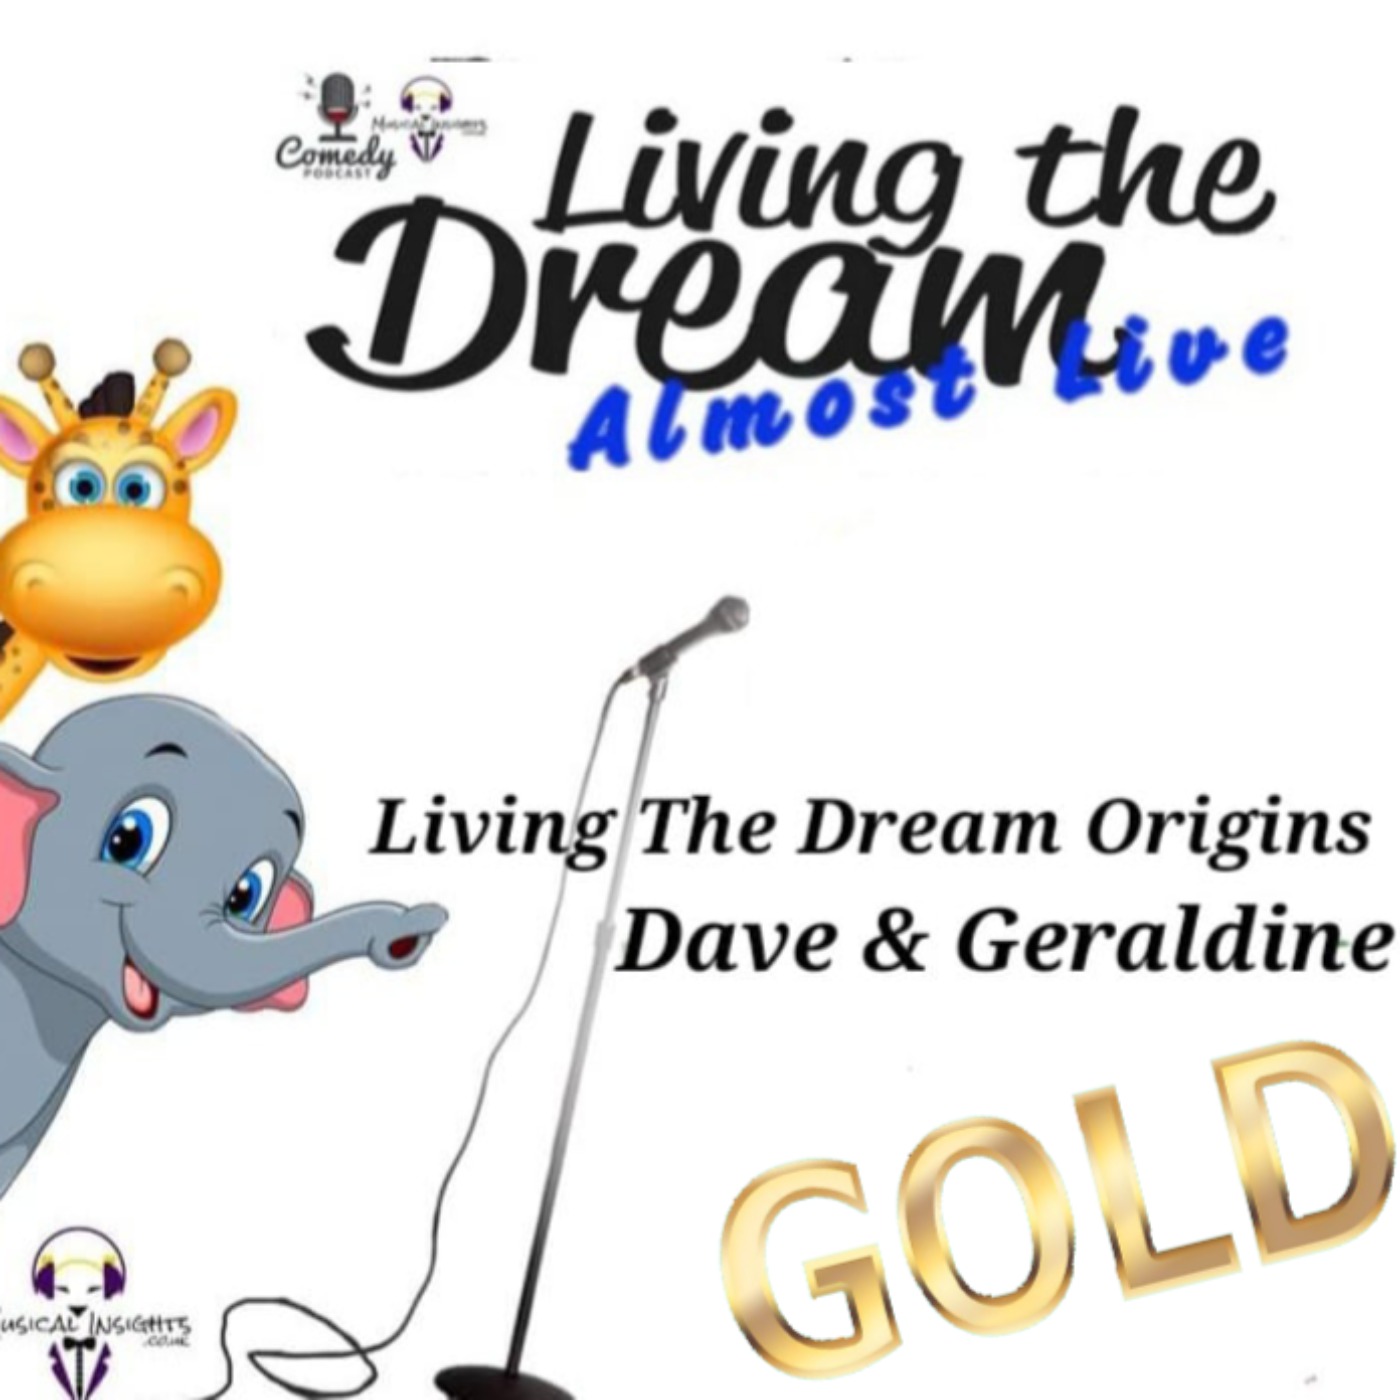 Special Episode - Dave & Geraldine Gold